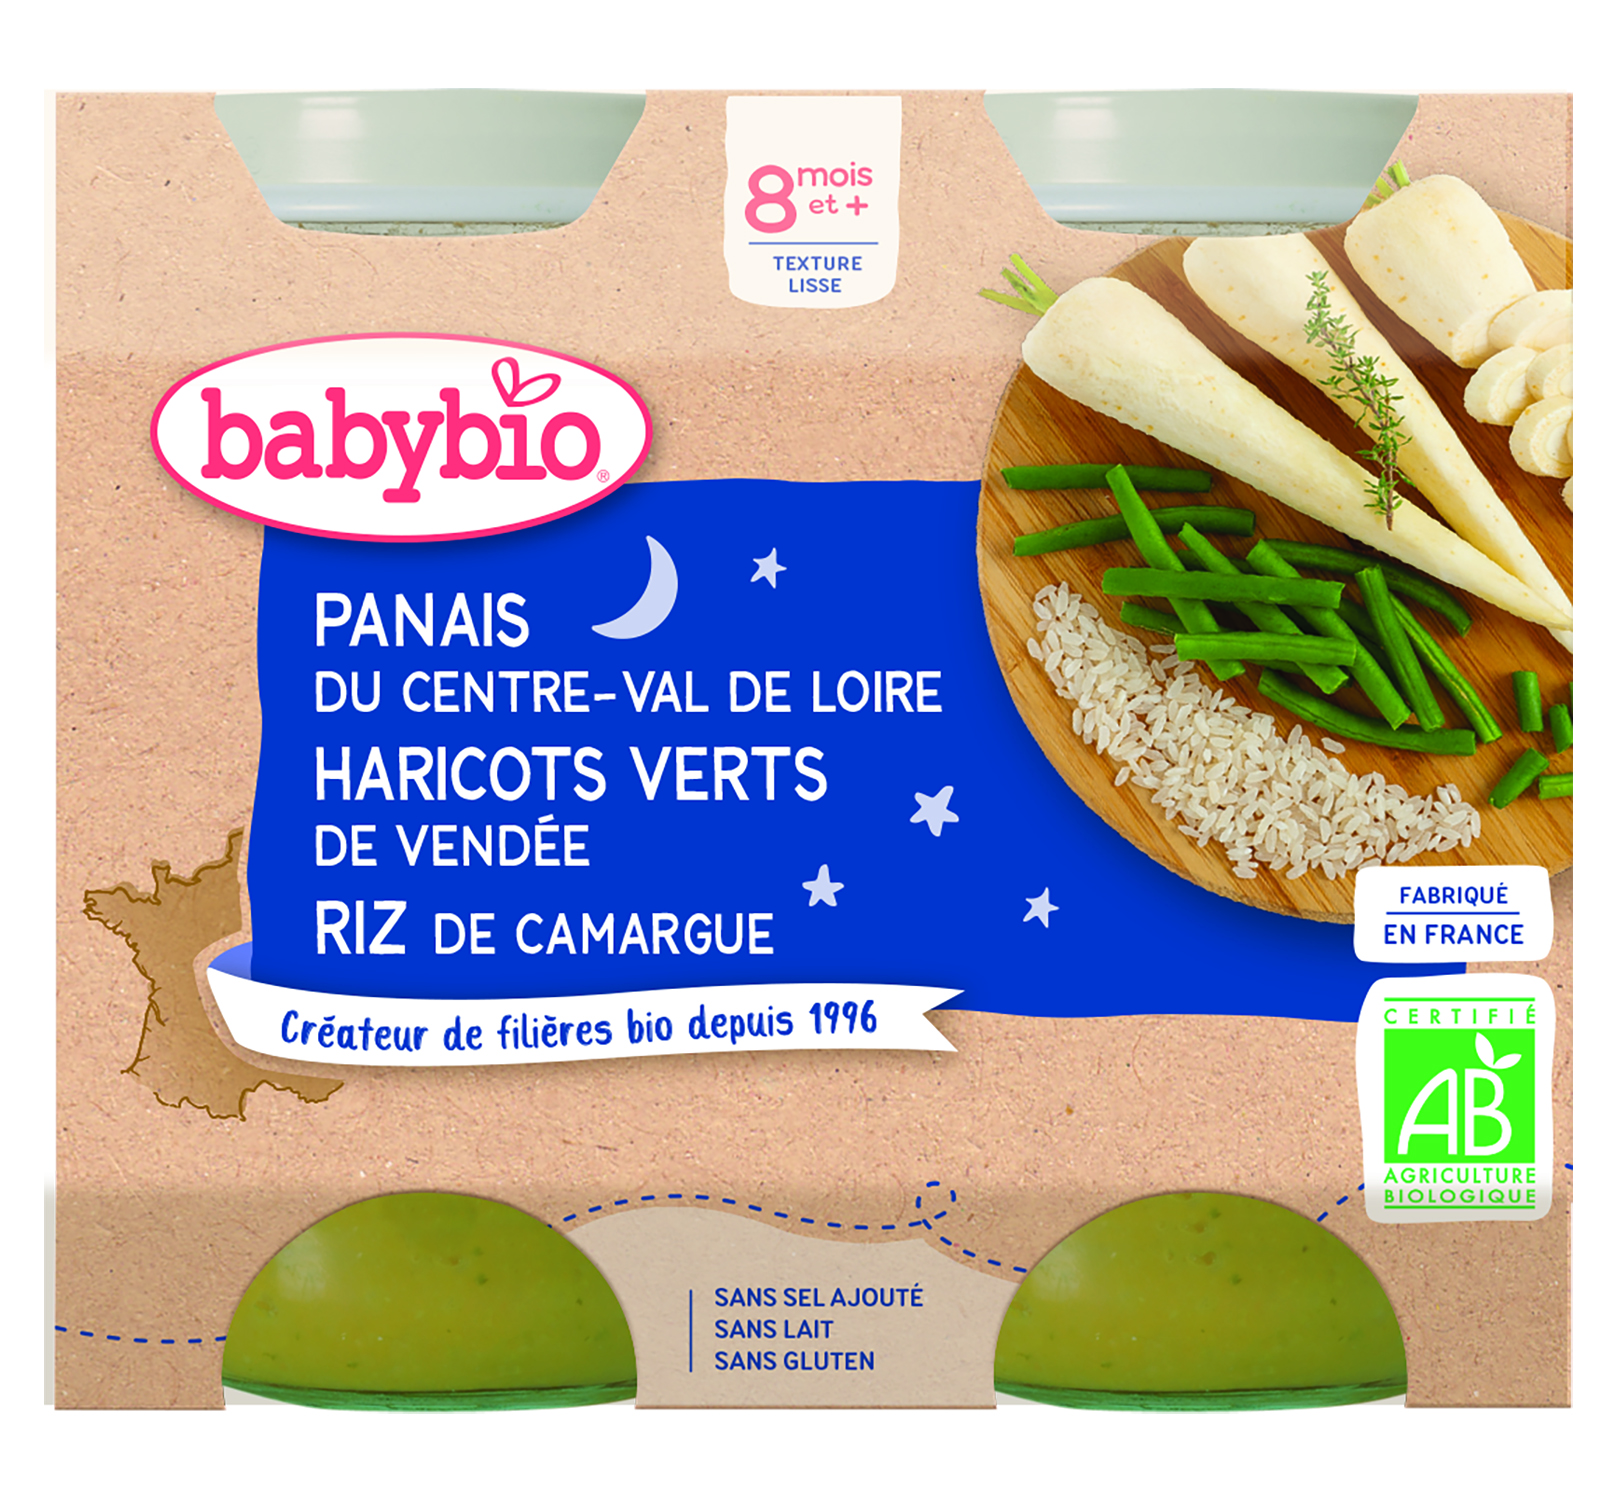 Babybio მენიუ "ძილინებისა" - ძირთეთრა და ფრანგული ლობიო ბრინჯით, 8 თვ. 200გ. x 2ც.